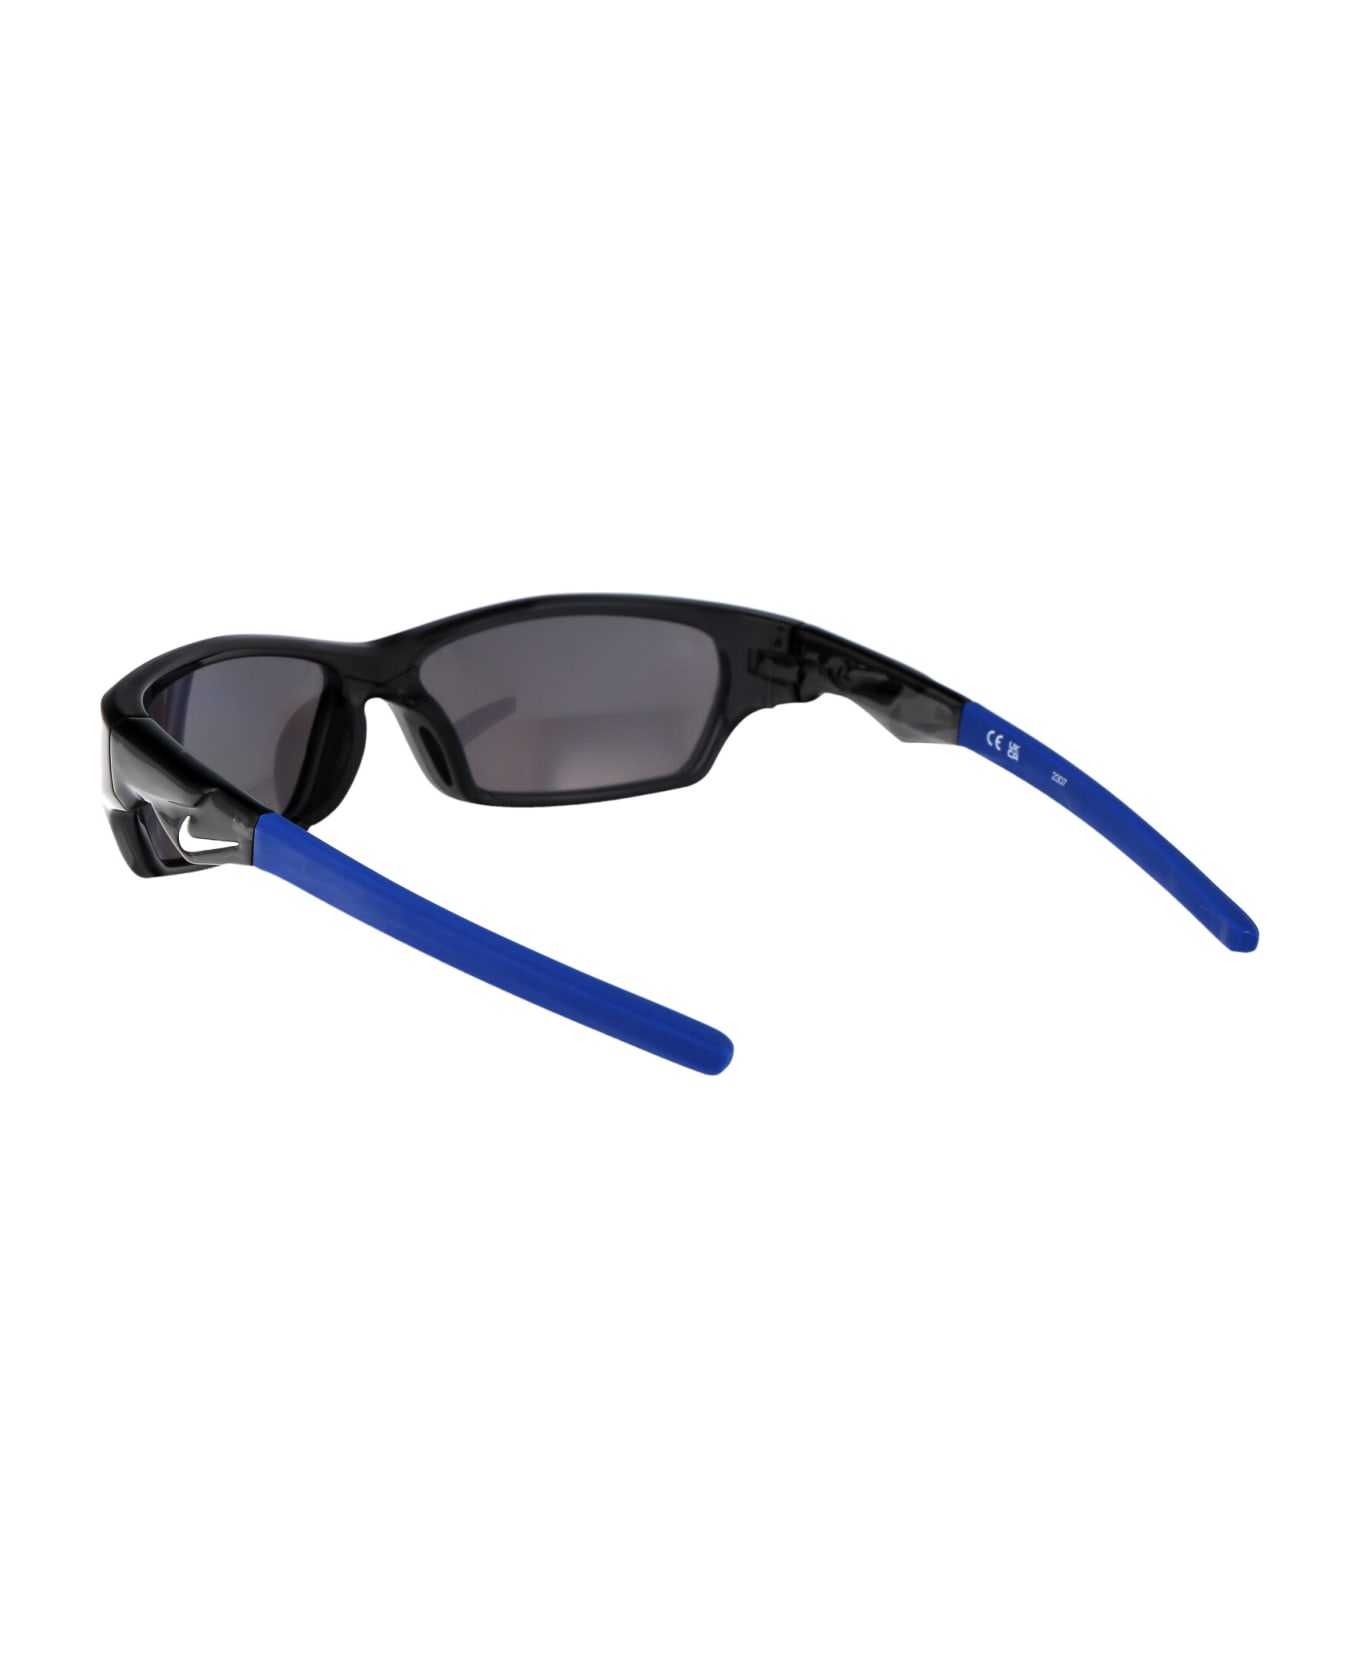 Nike Jolt Sunglasses - 060 ANTHRACITE GRIS